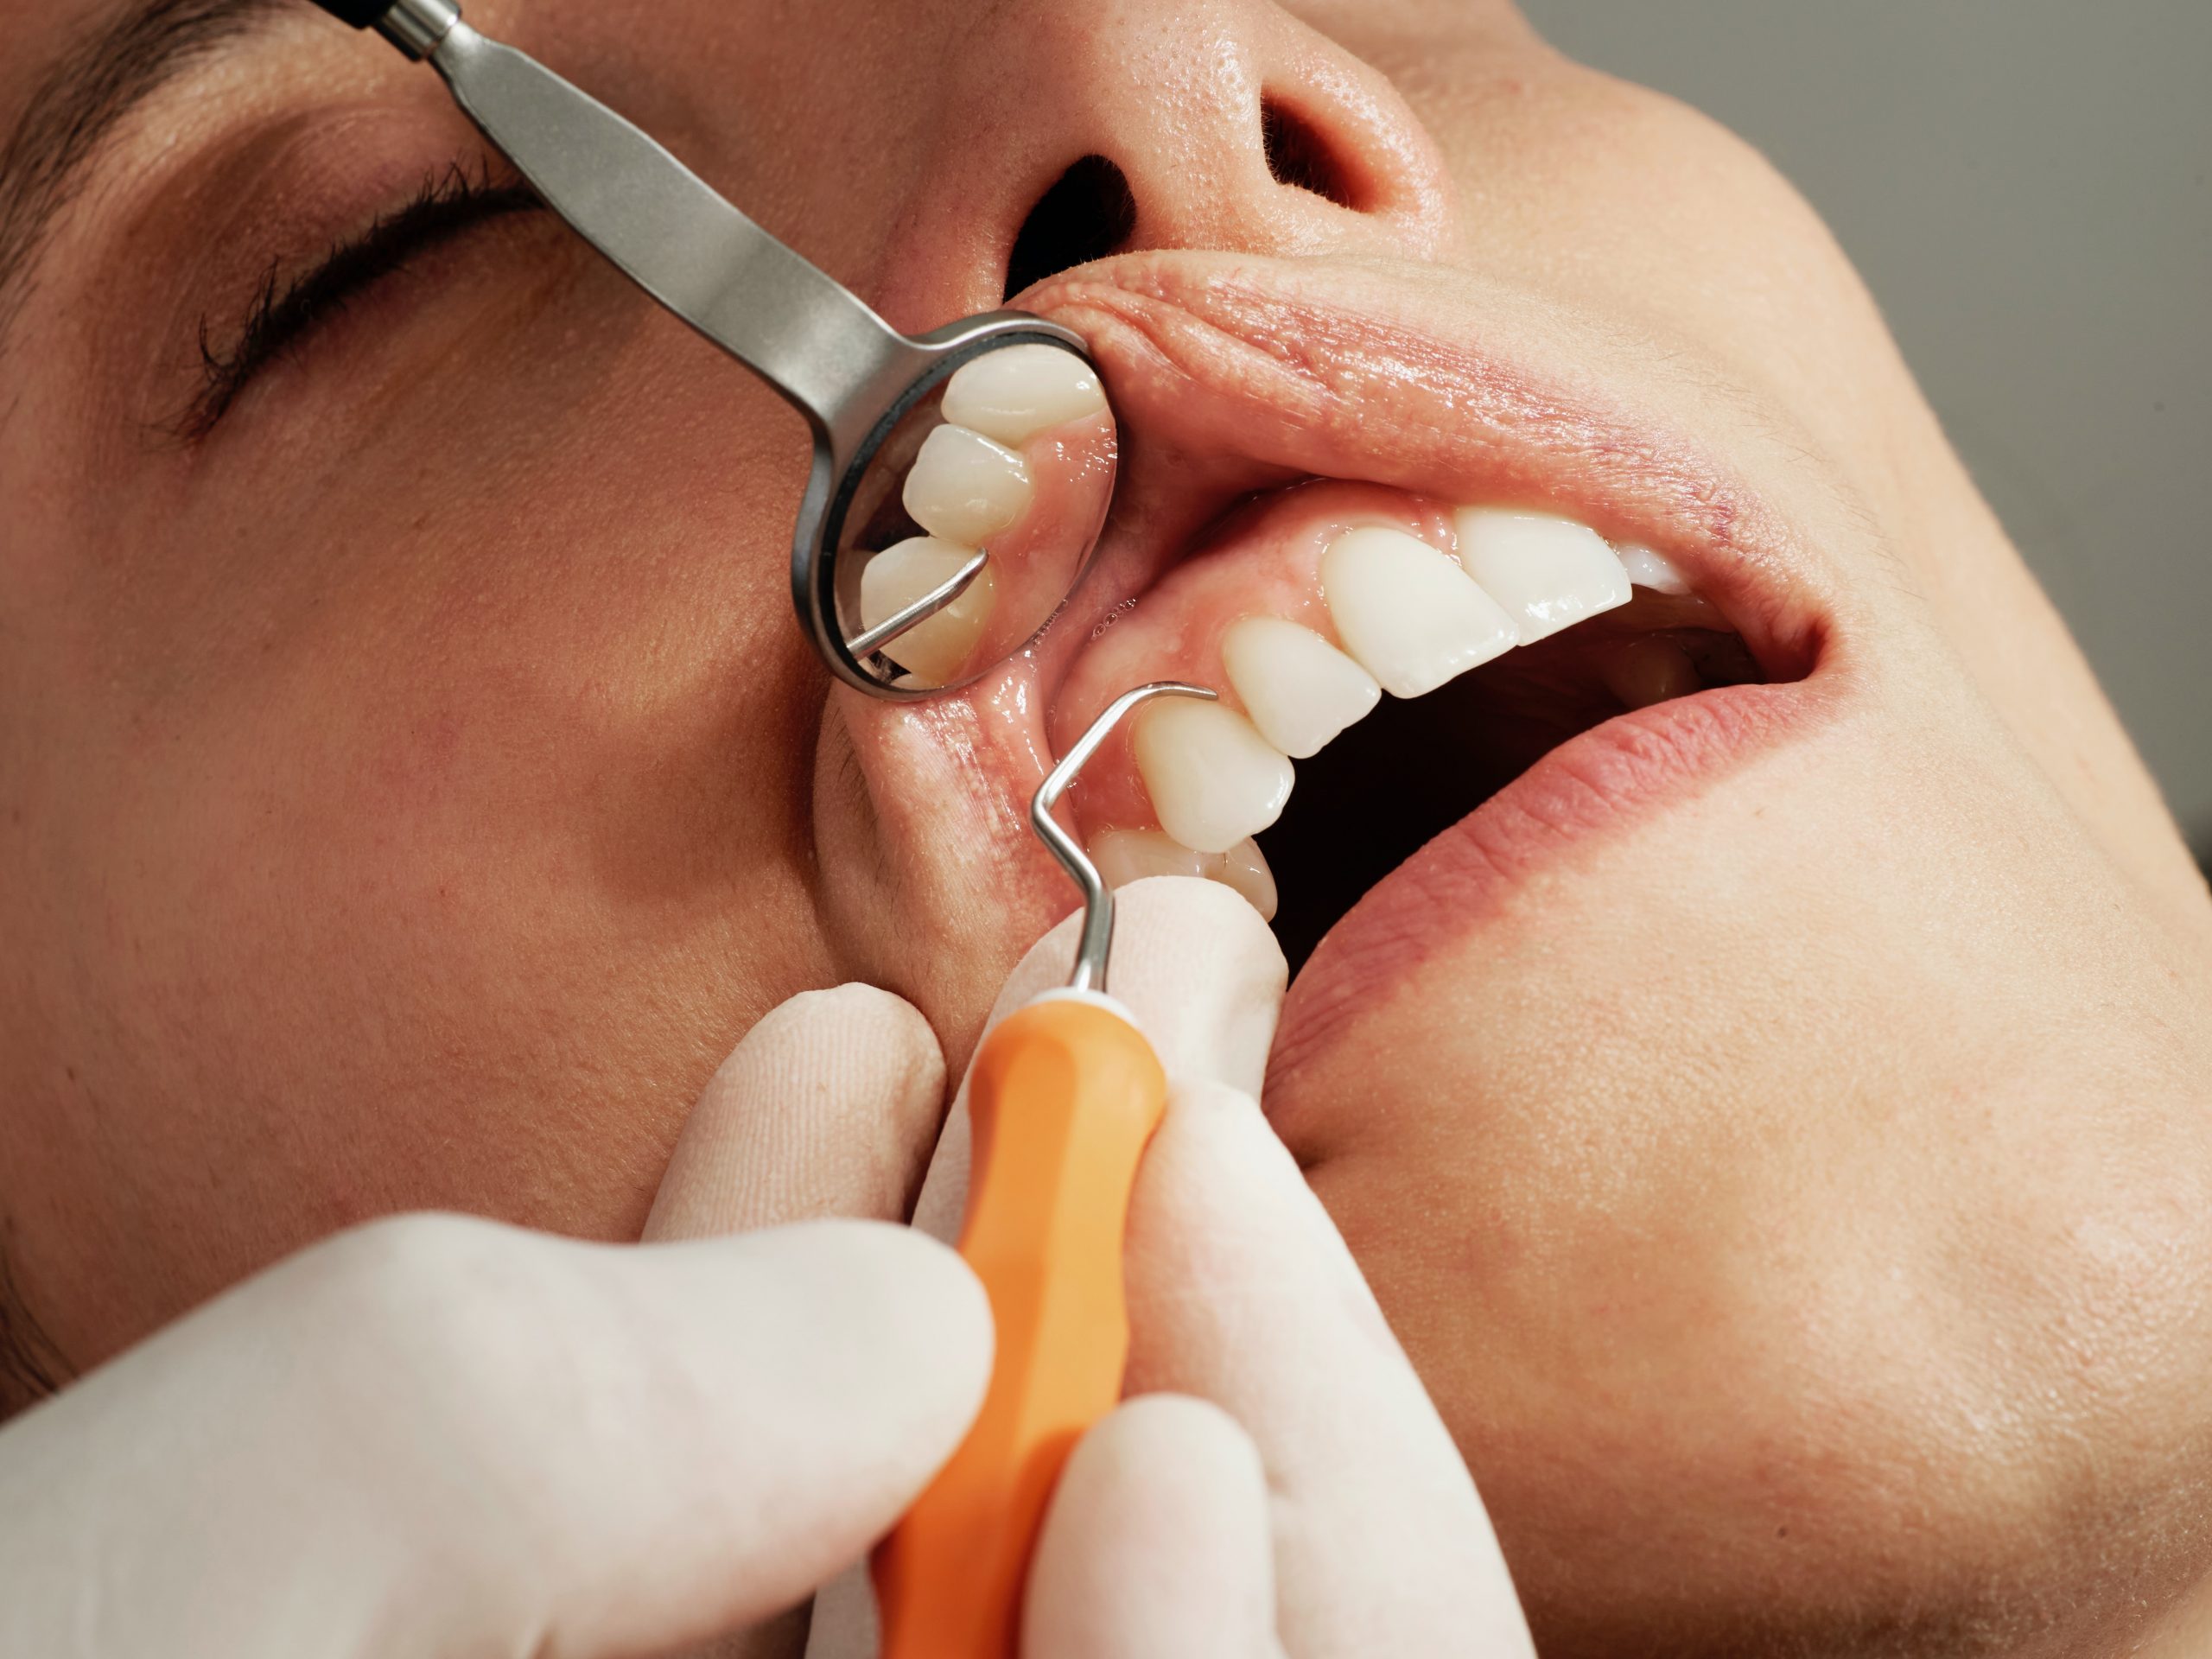 Dental Fillings and its Lifespan